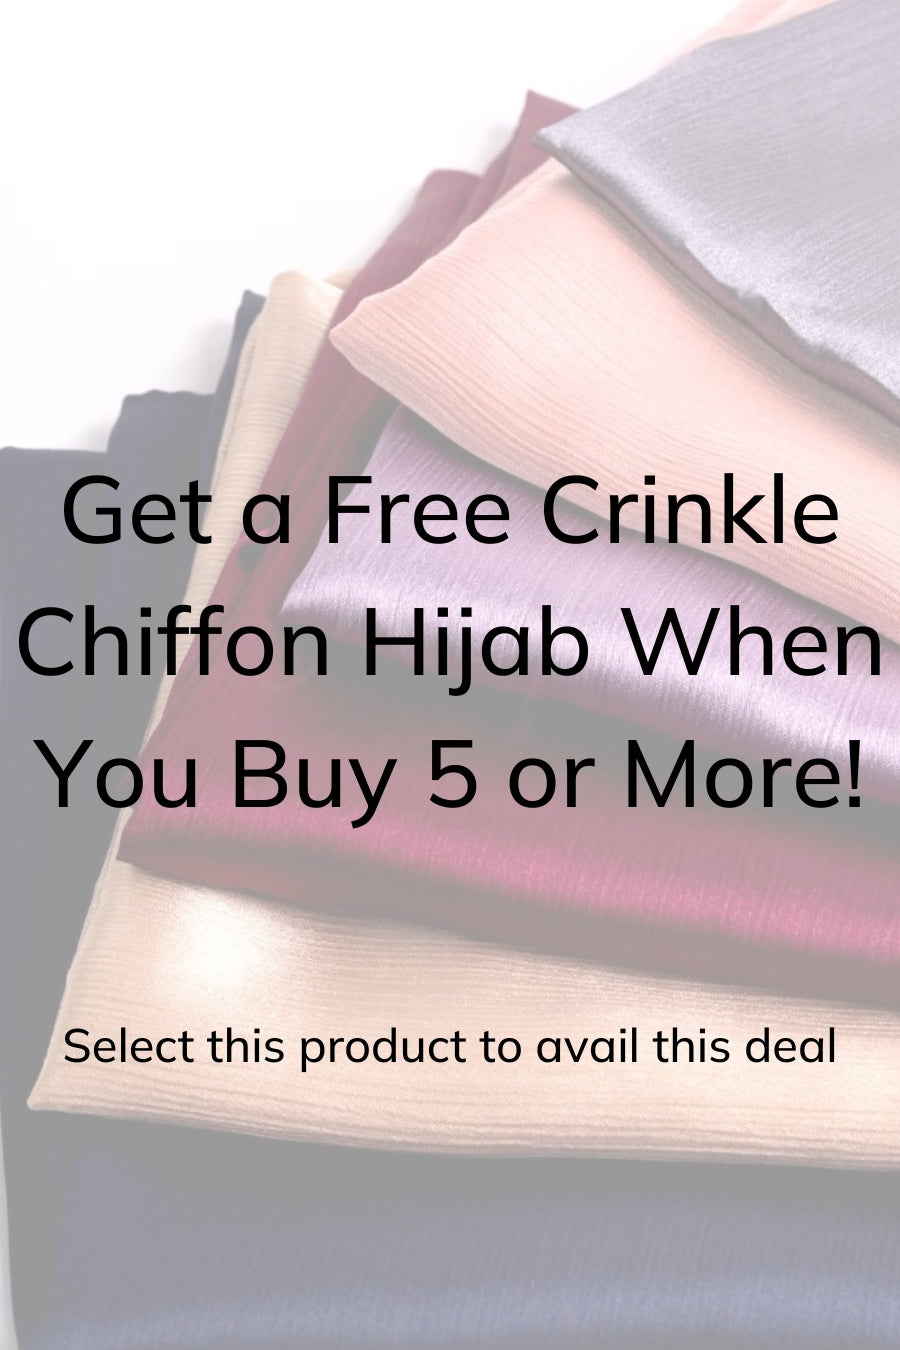 Crinkle Chiffon Hijabs - Buy 5 Get 1 Free